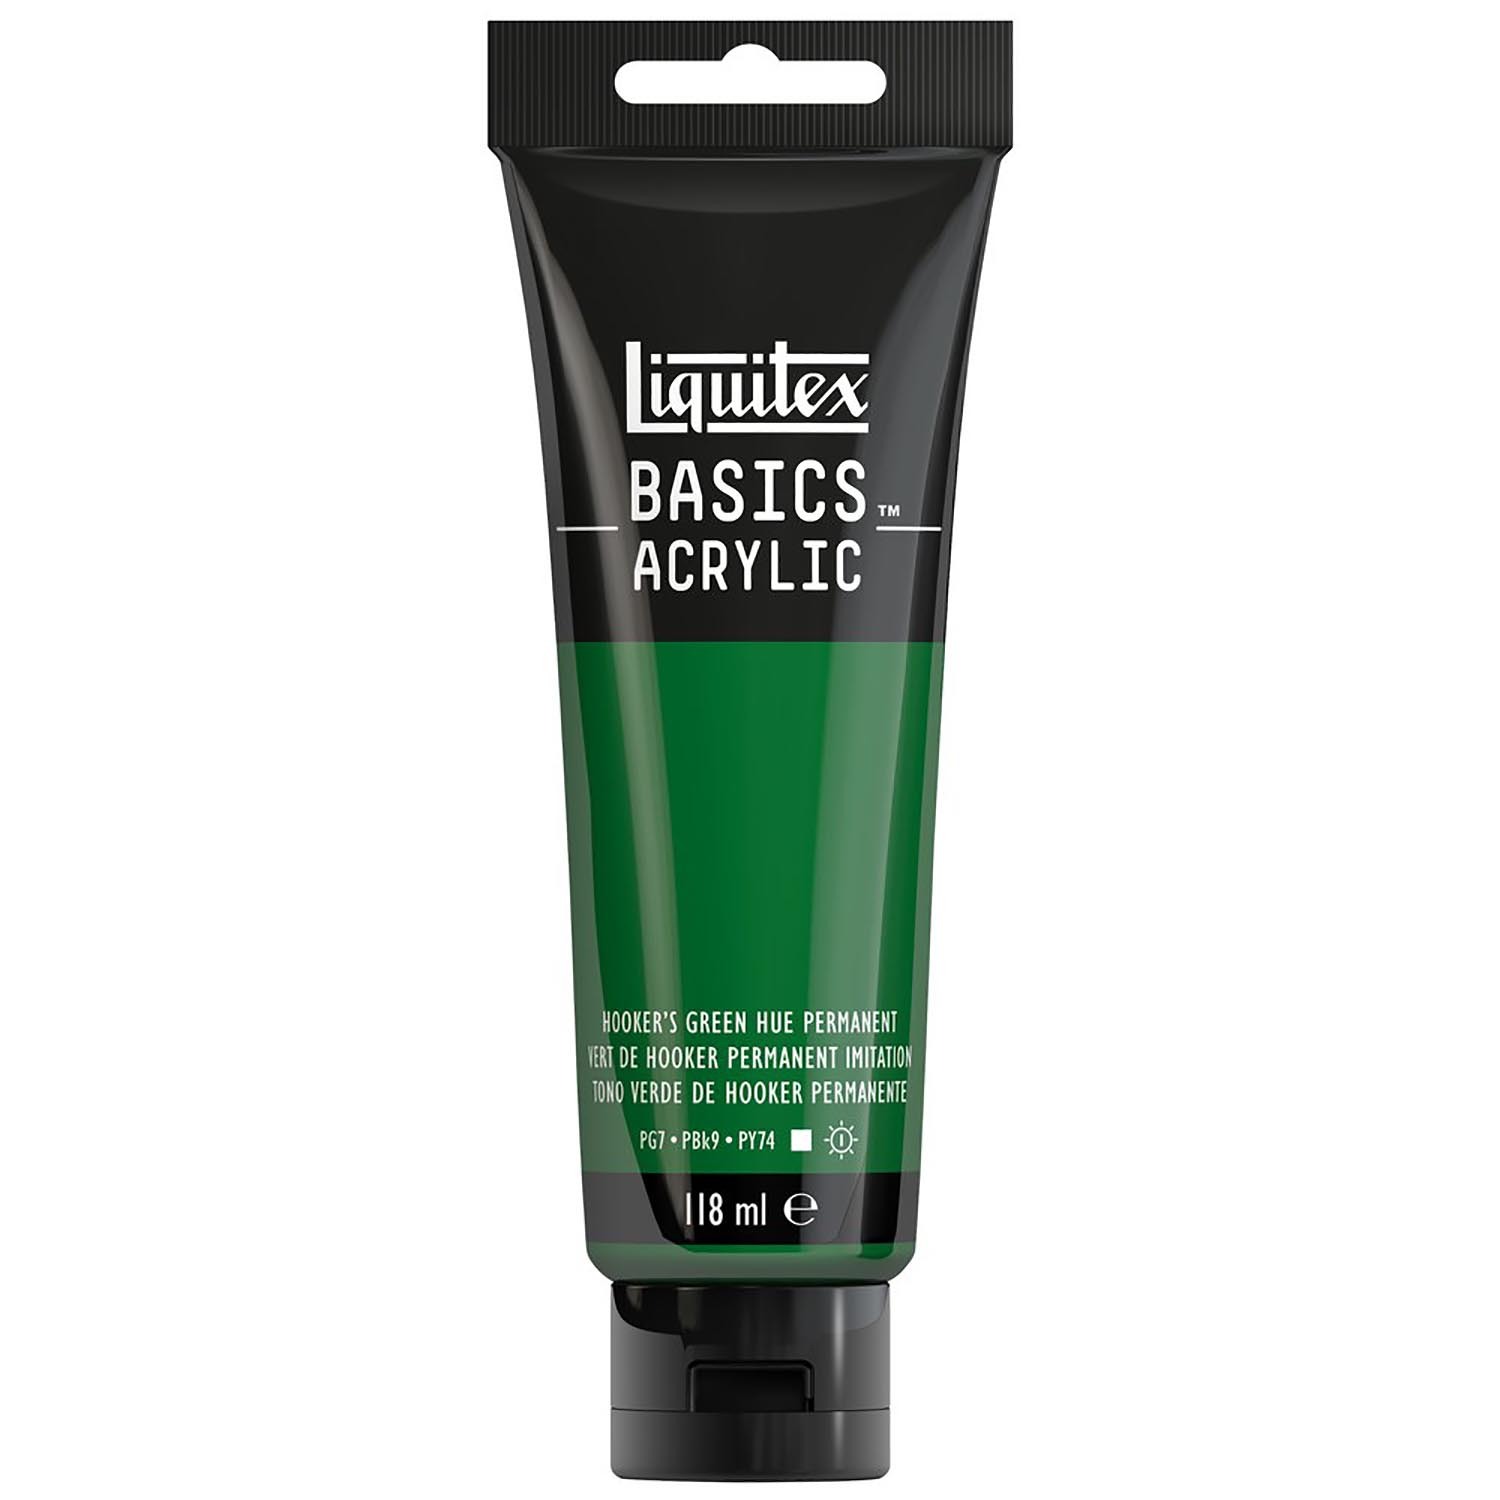 Liquitex Basics Acrylic Paint Hooker's Green Hue Permanent 118ml Image